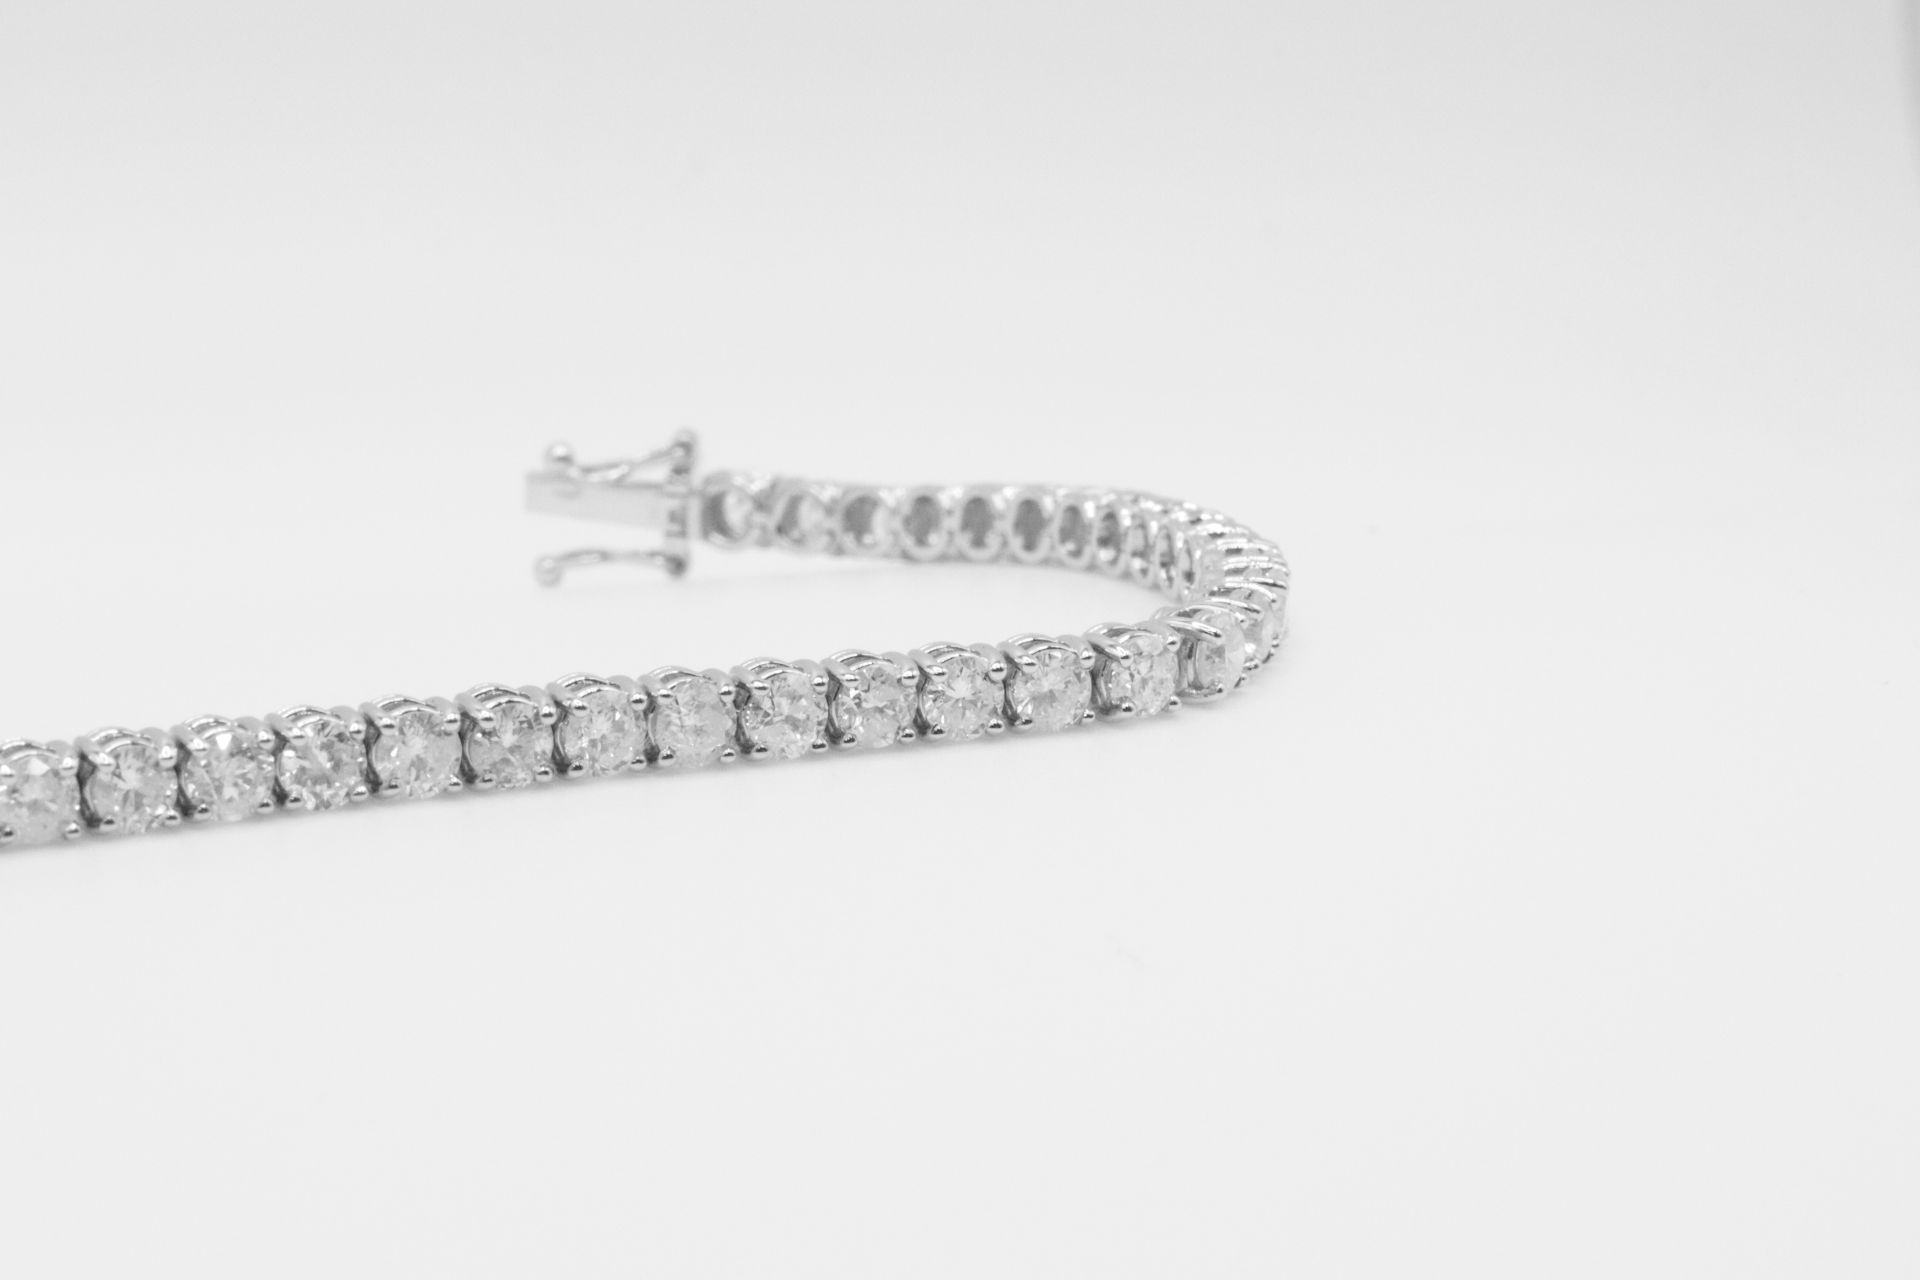 ** ON SALE ** 9.0 Carat 18ct White Gold Tennis Bracelet Round Brilliant Cut Natural Diamonds - Image 11 of 17